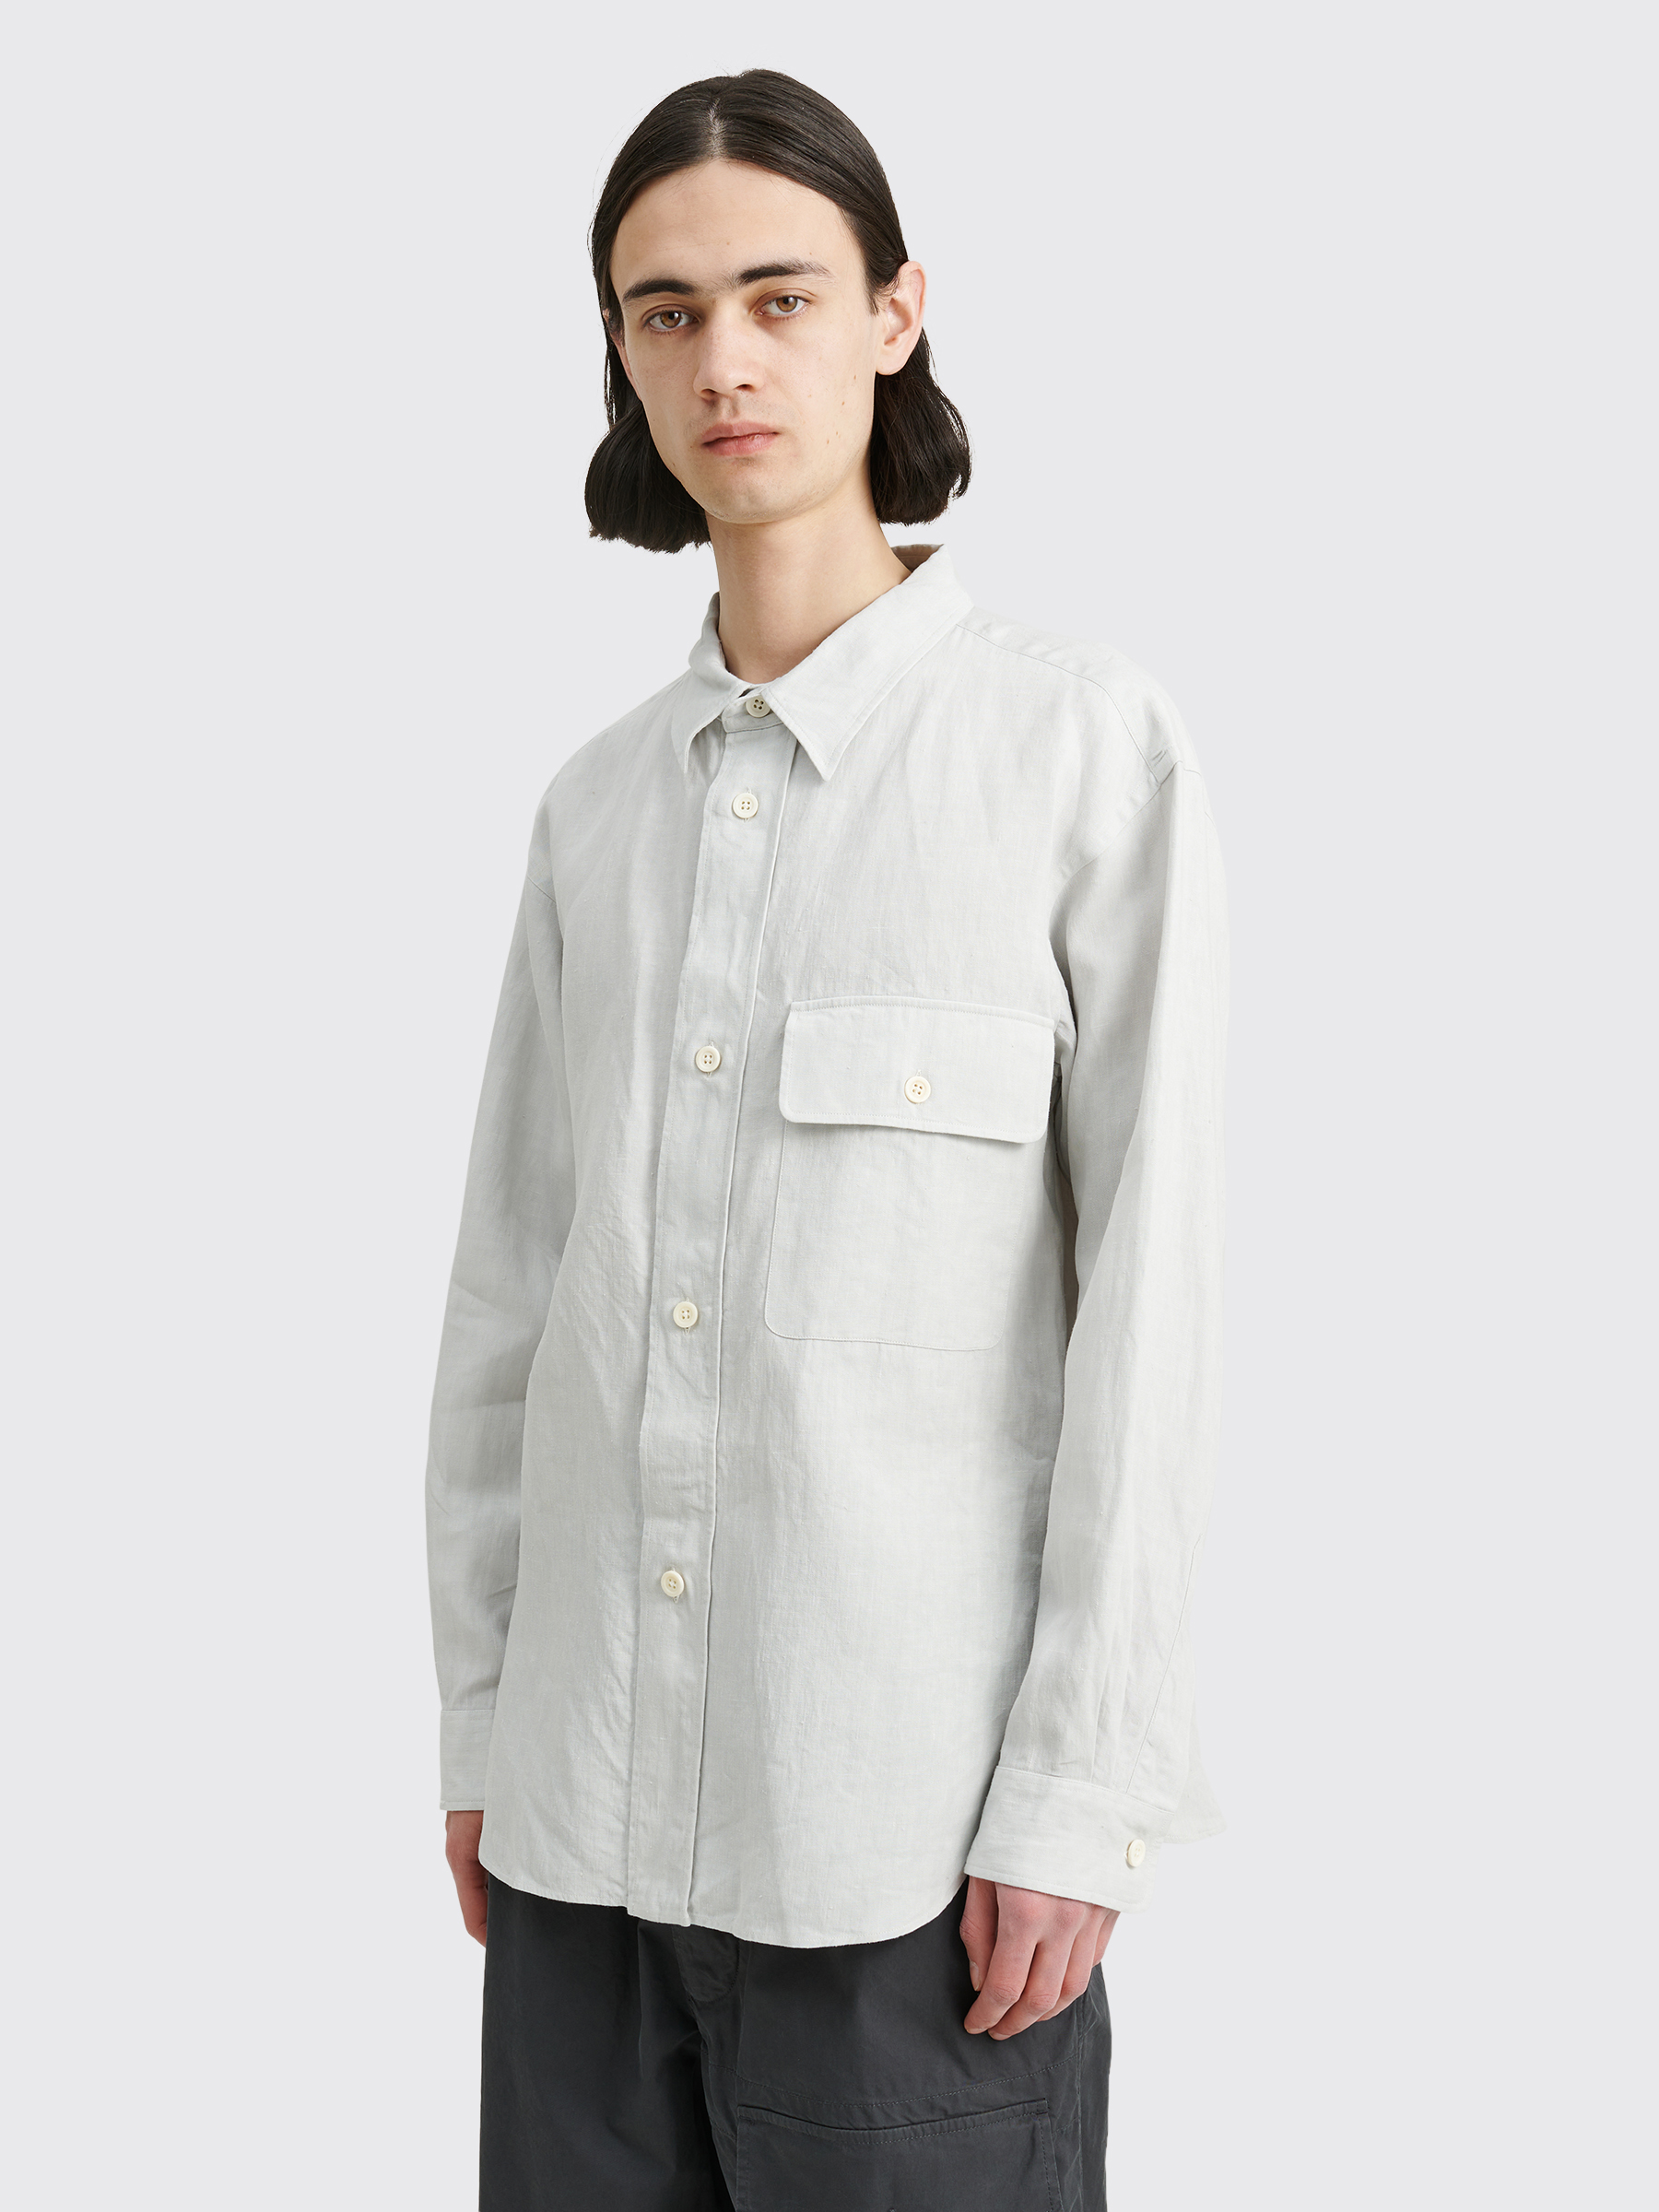 Très Bien - Margaret Howell Oversized Flap Pocket Shirt Chalk